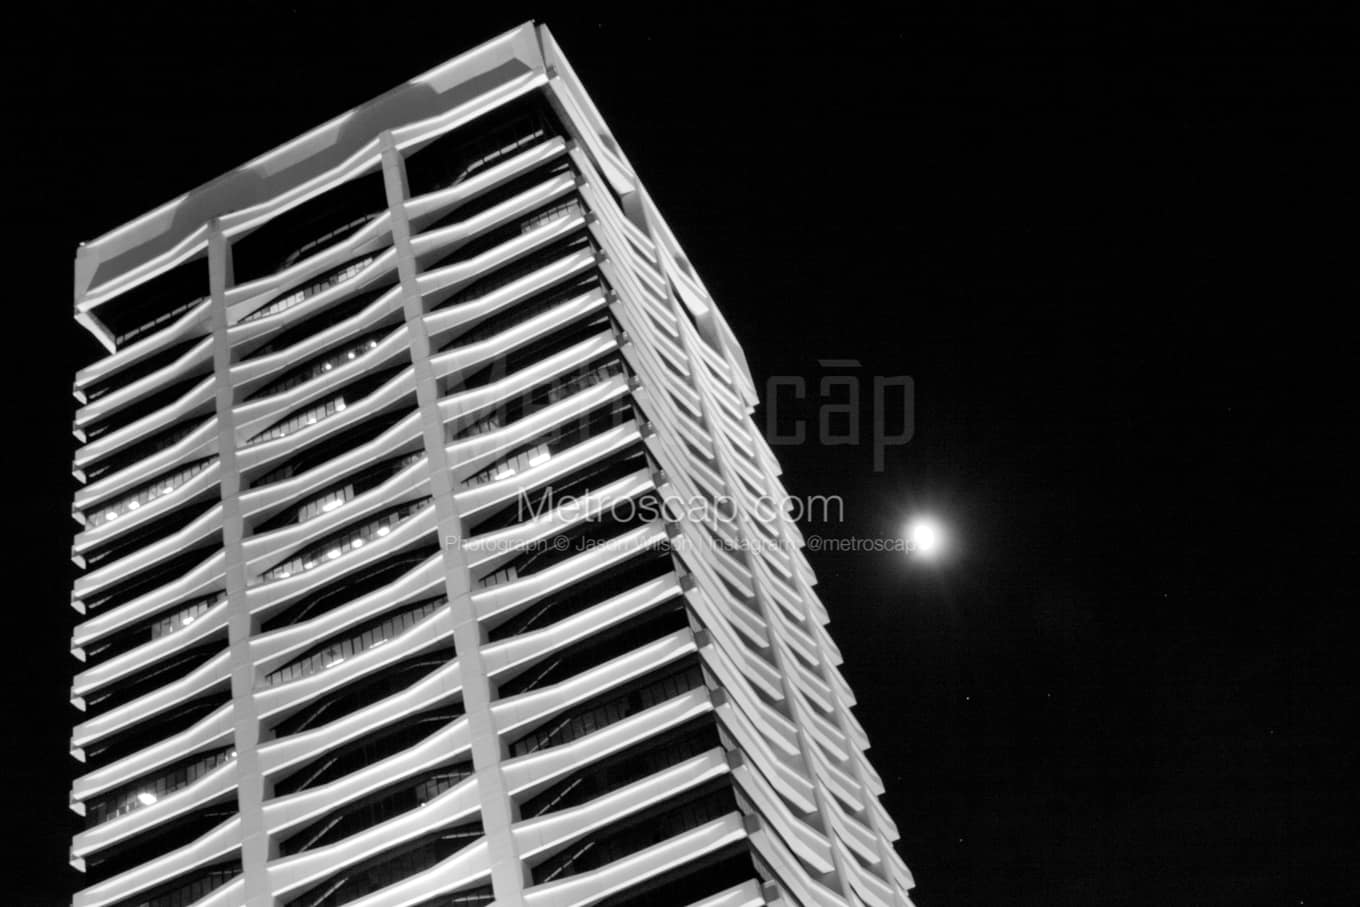 Black & White Jacksonville Architecture Pictures